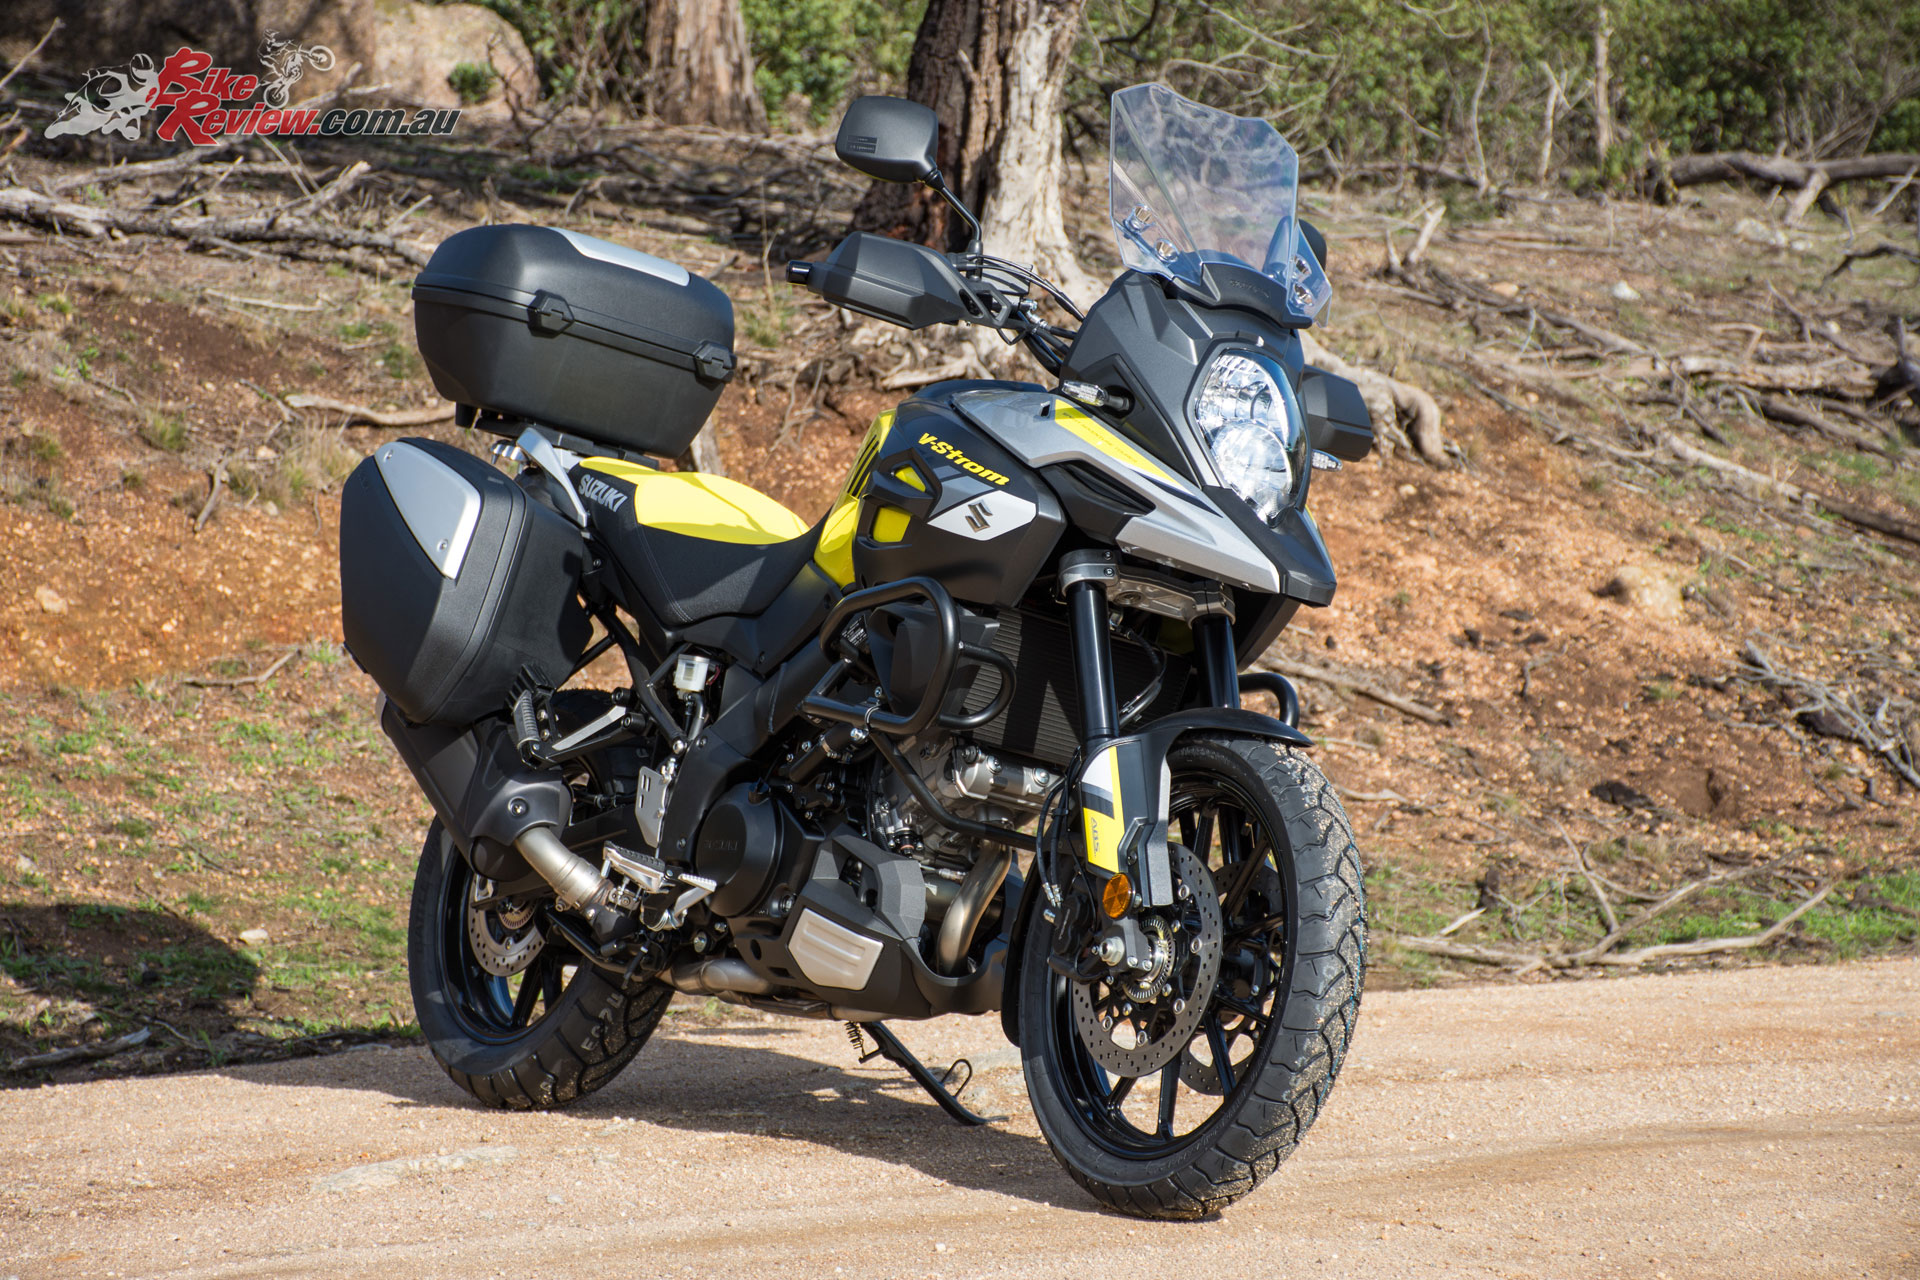 2018 Suzuki VStrom 1000 bonus accessory deal Bike Review